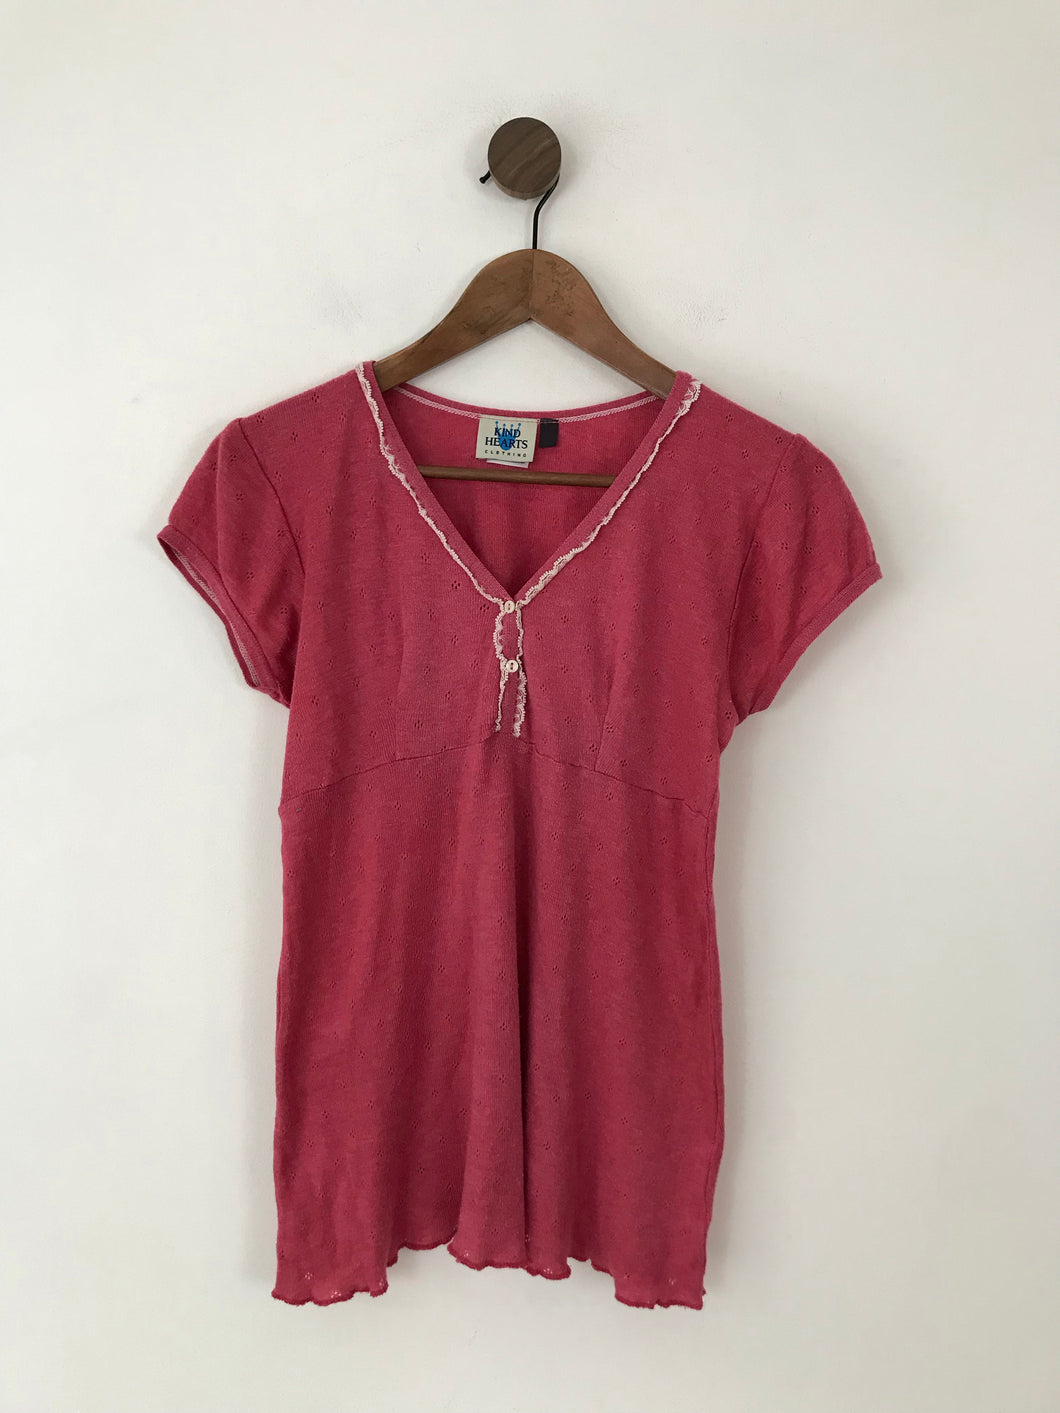 Kind Hearts Women's Vintage Style Knit Vest | M UK12 | Pink